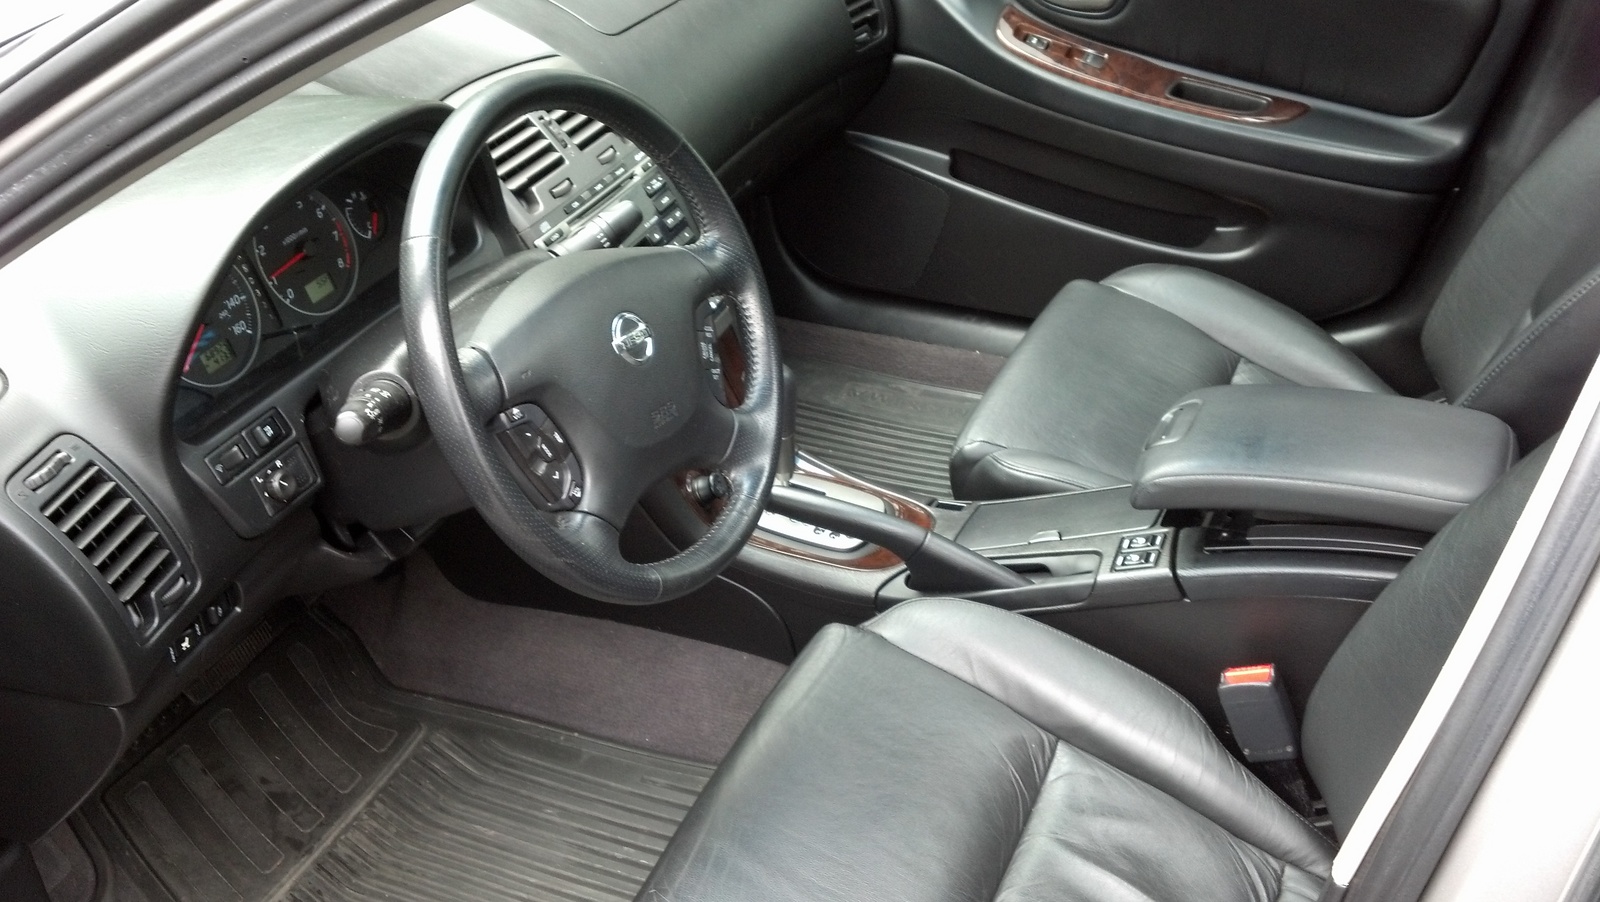 2002 Nissan maxima interior